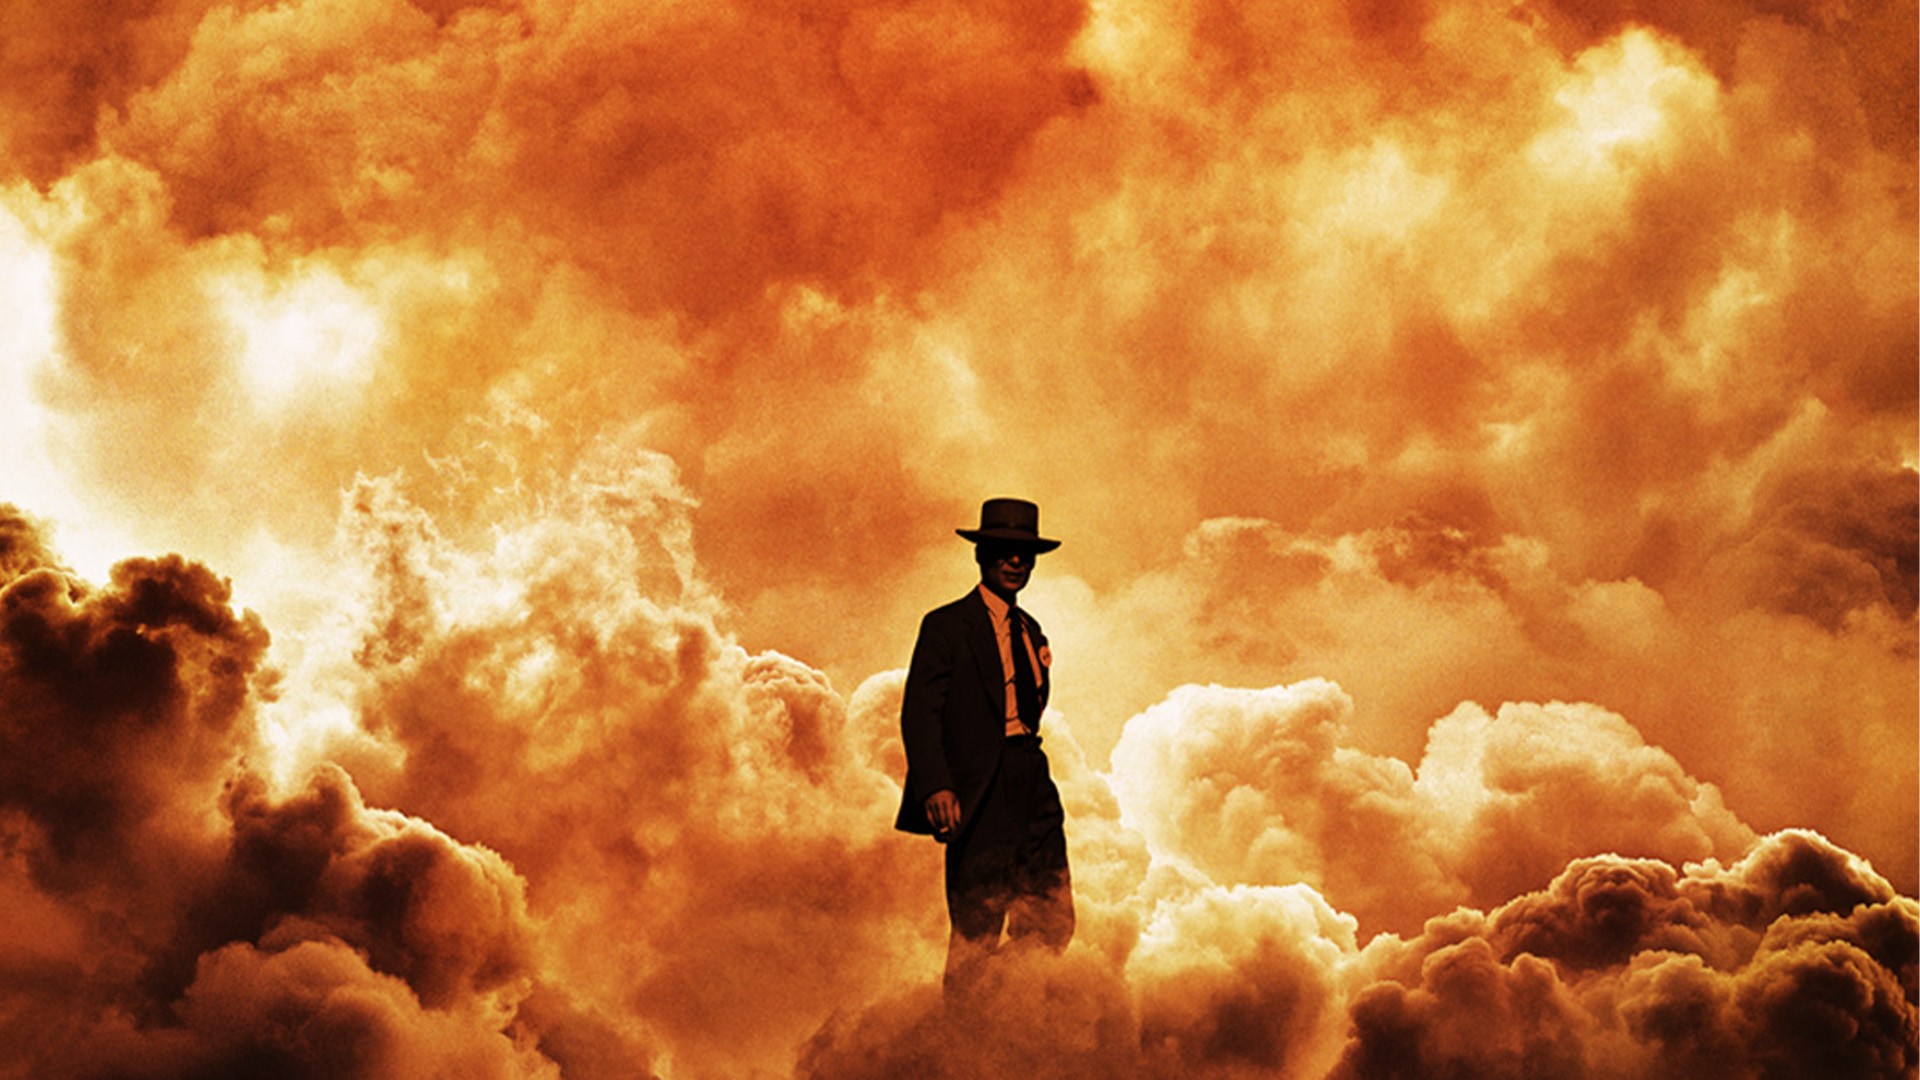 A man walks through fire and smoke in "Oppenheimer."